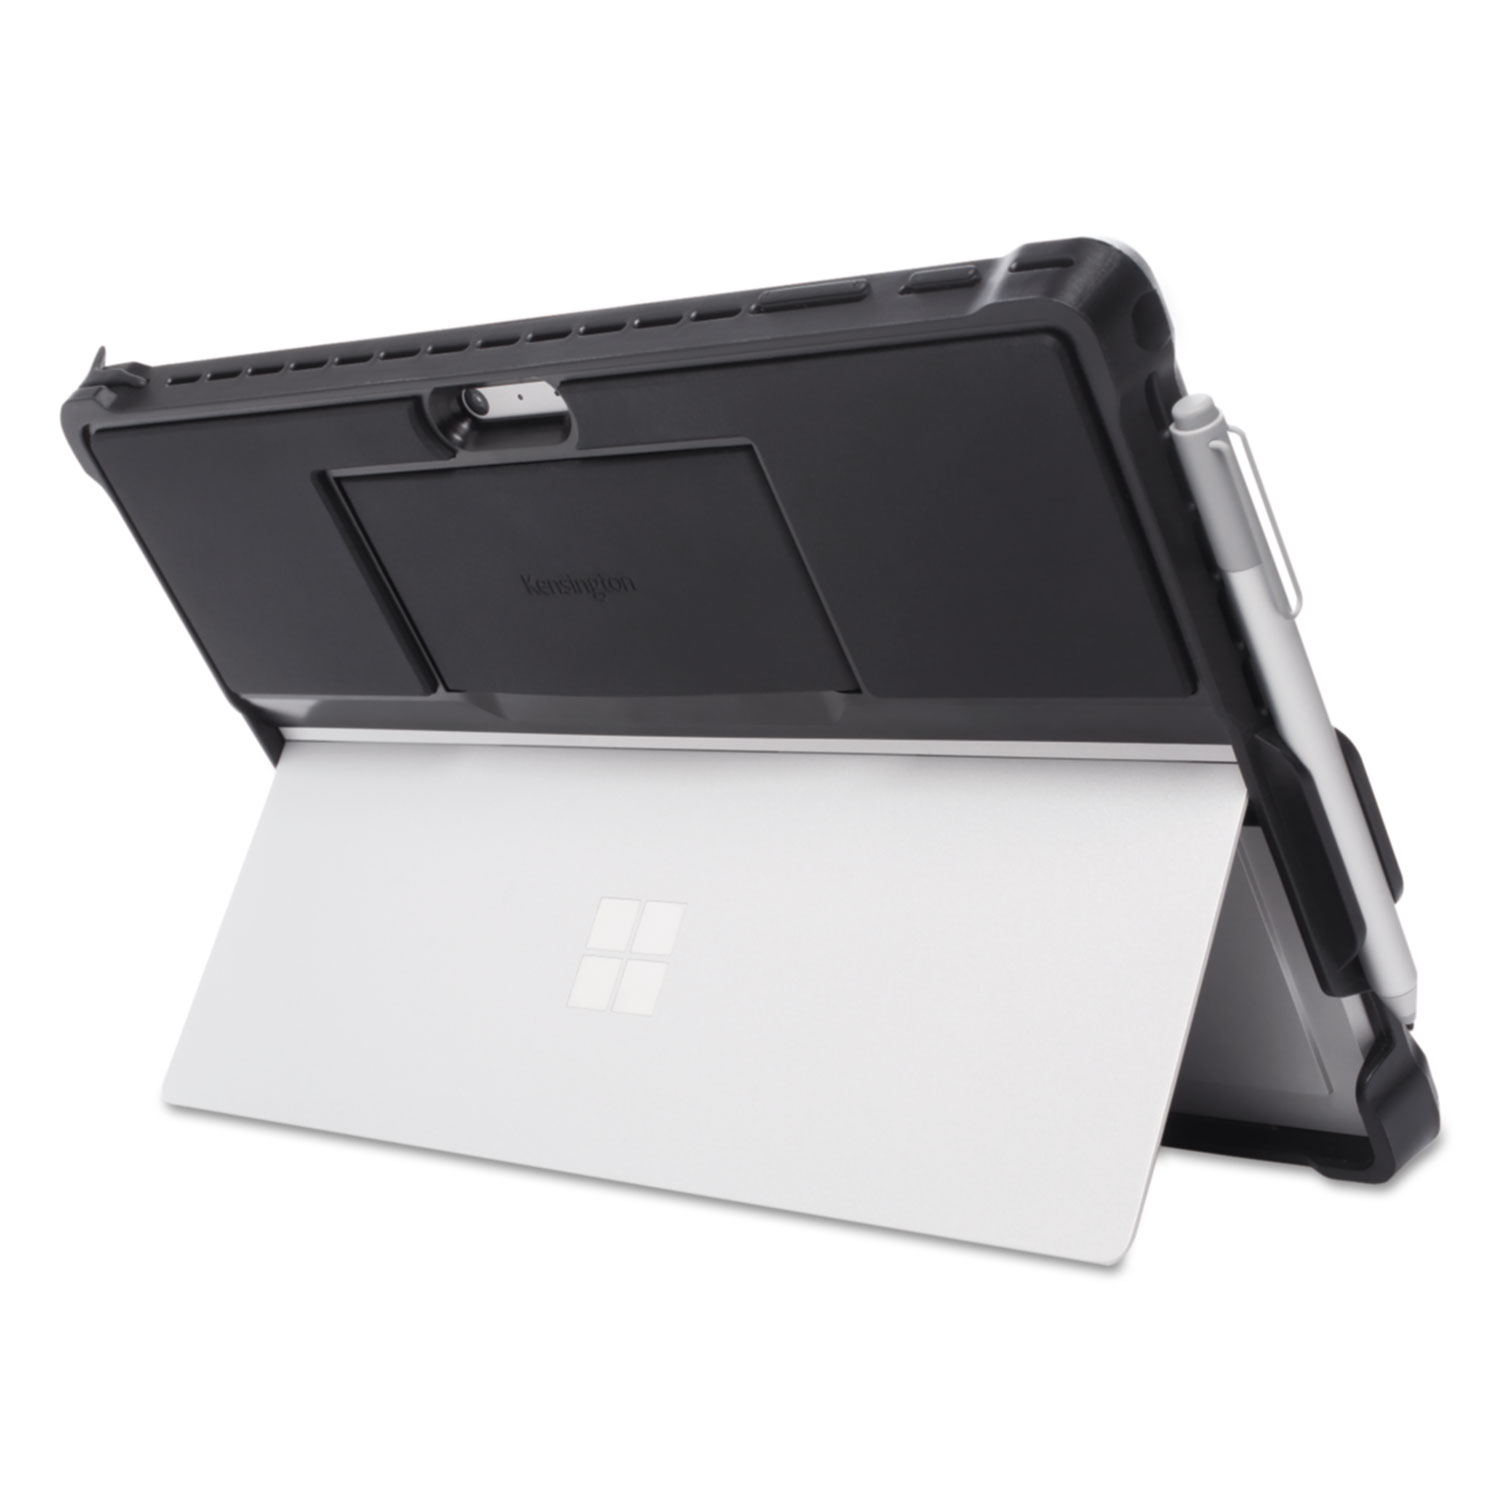 BlackBelt 2nd Degree Rugged Case for Microsoft Surface Pro 4